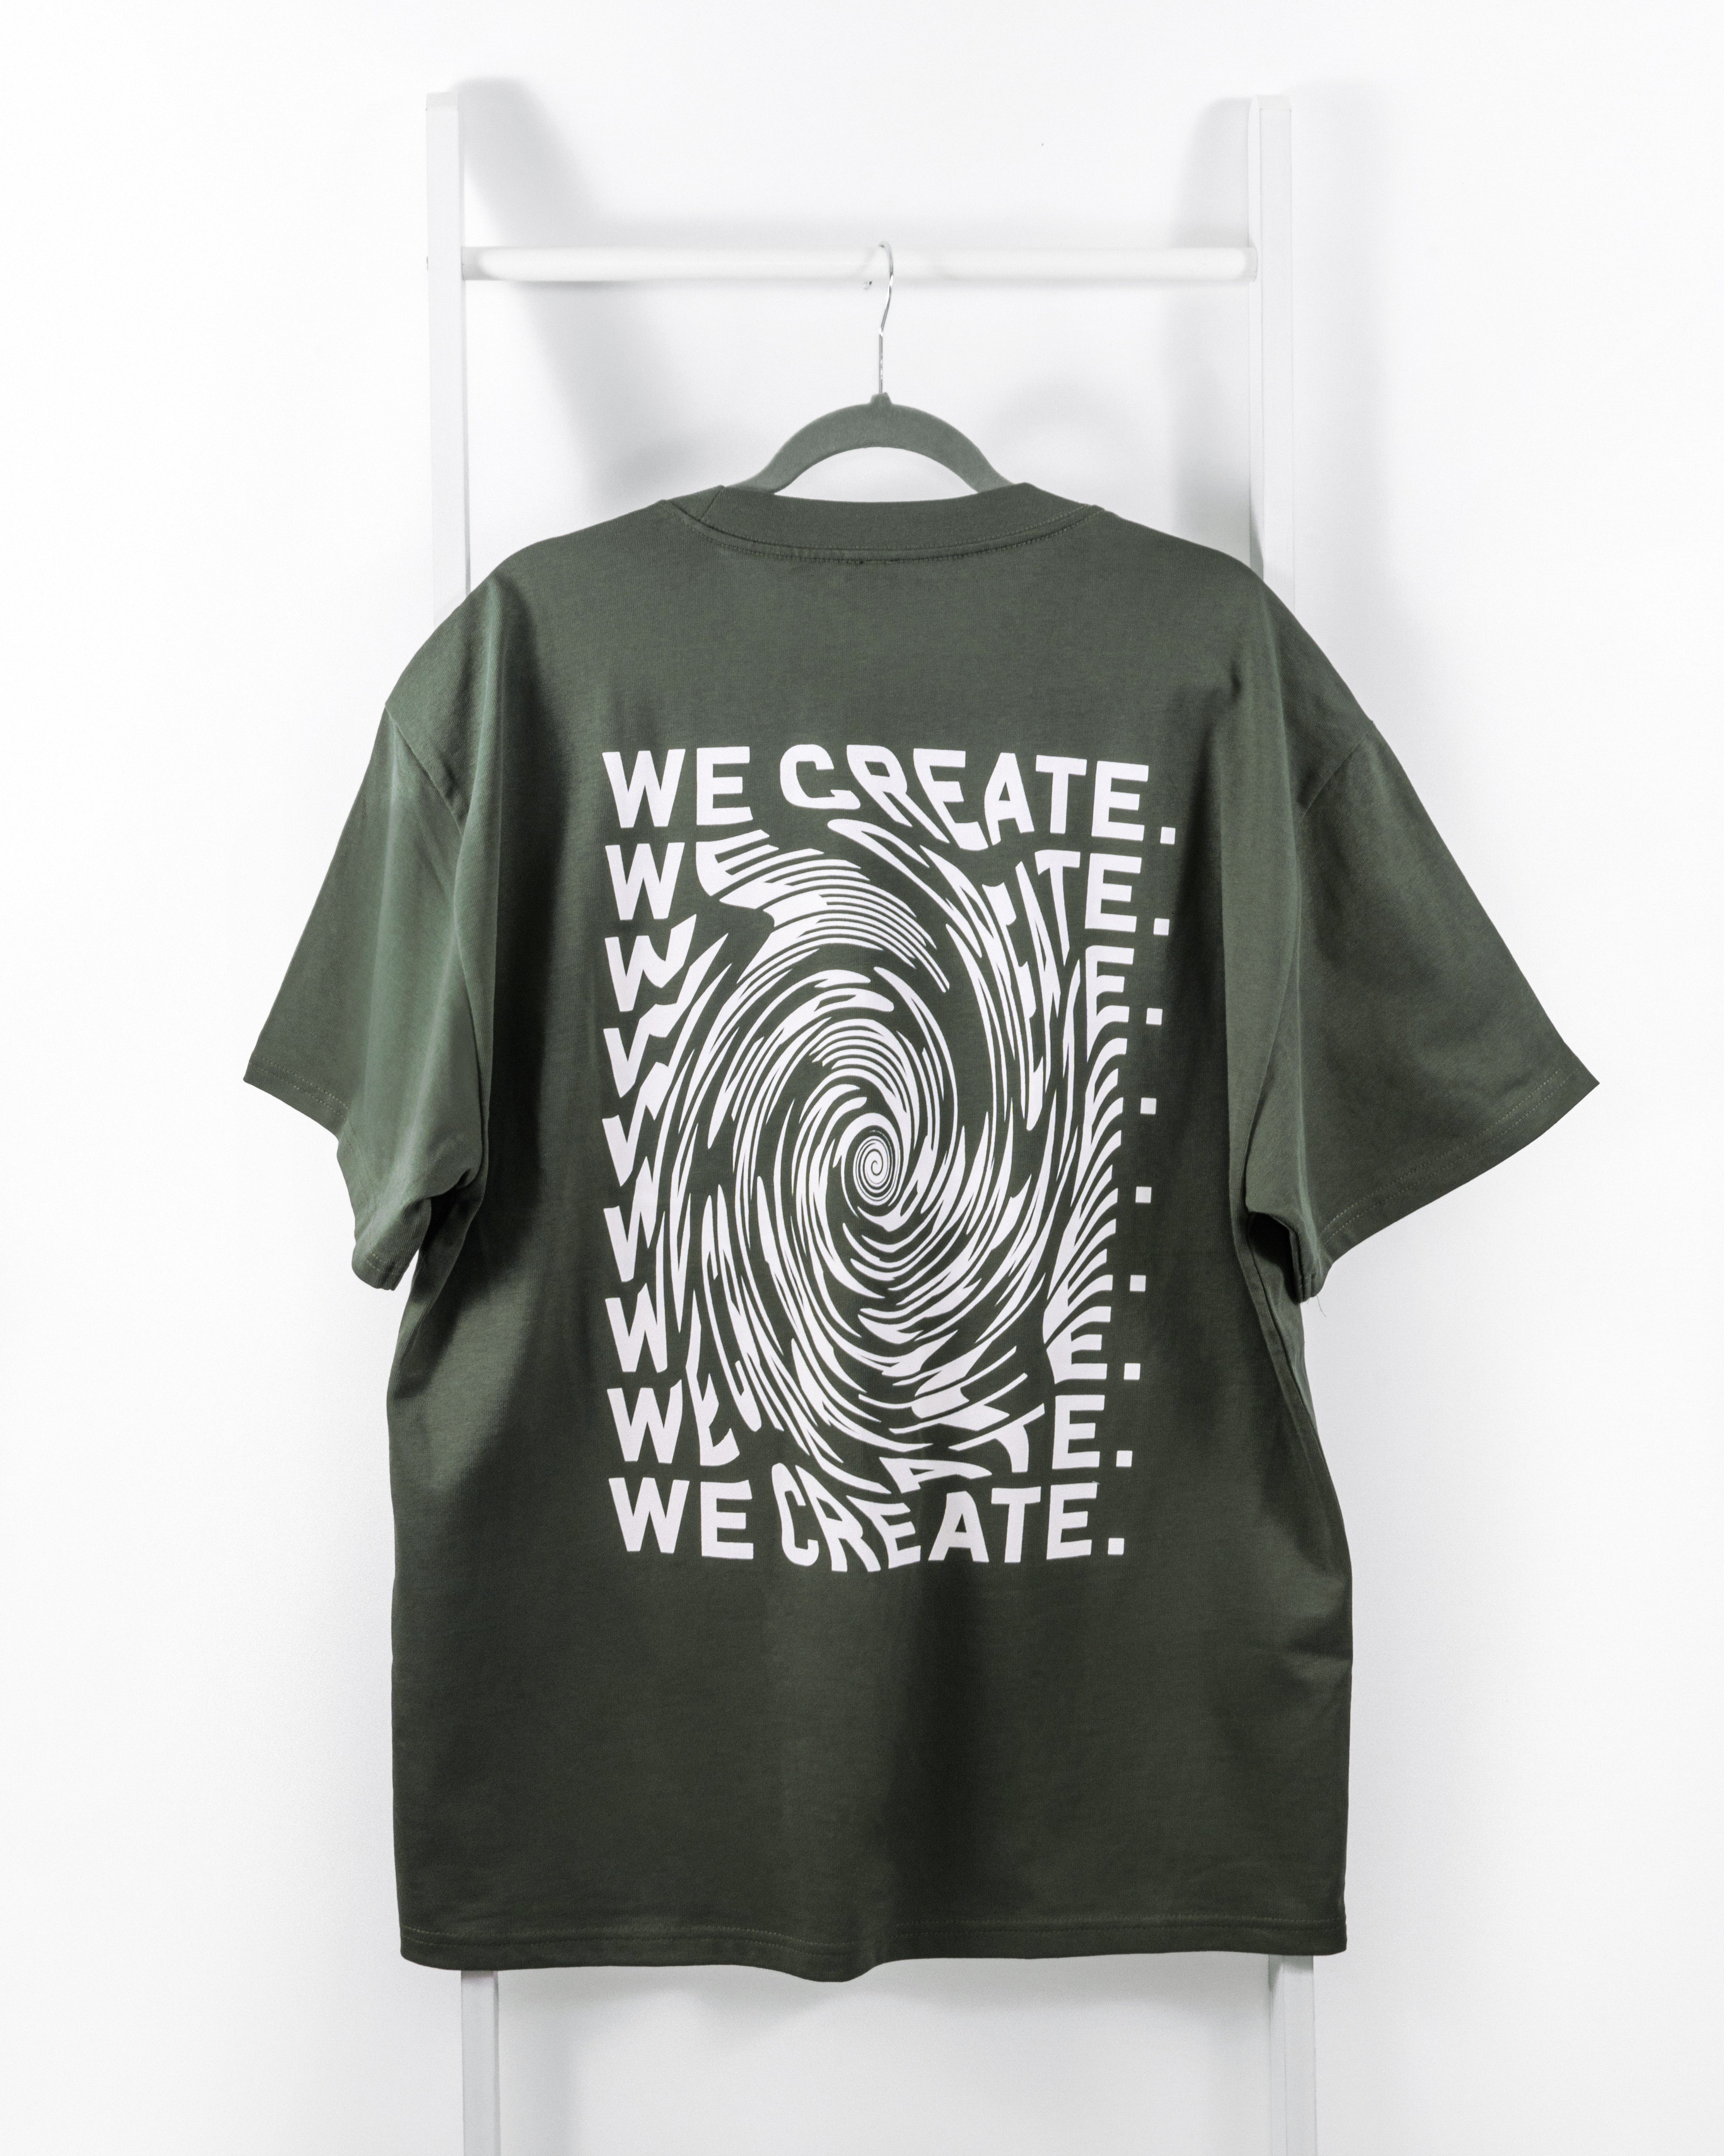 Creative 'Wormhole' Heavy T-Shirt (Cypress Green)